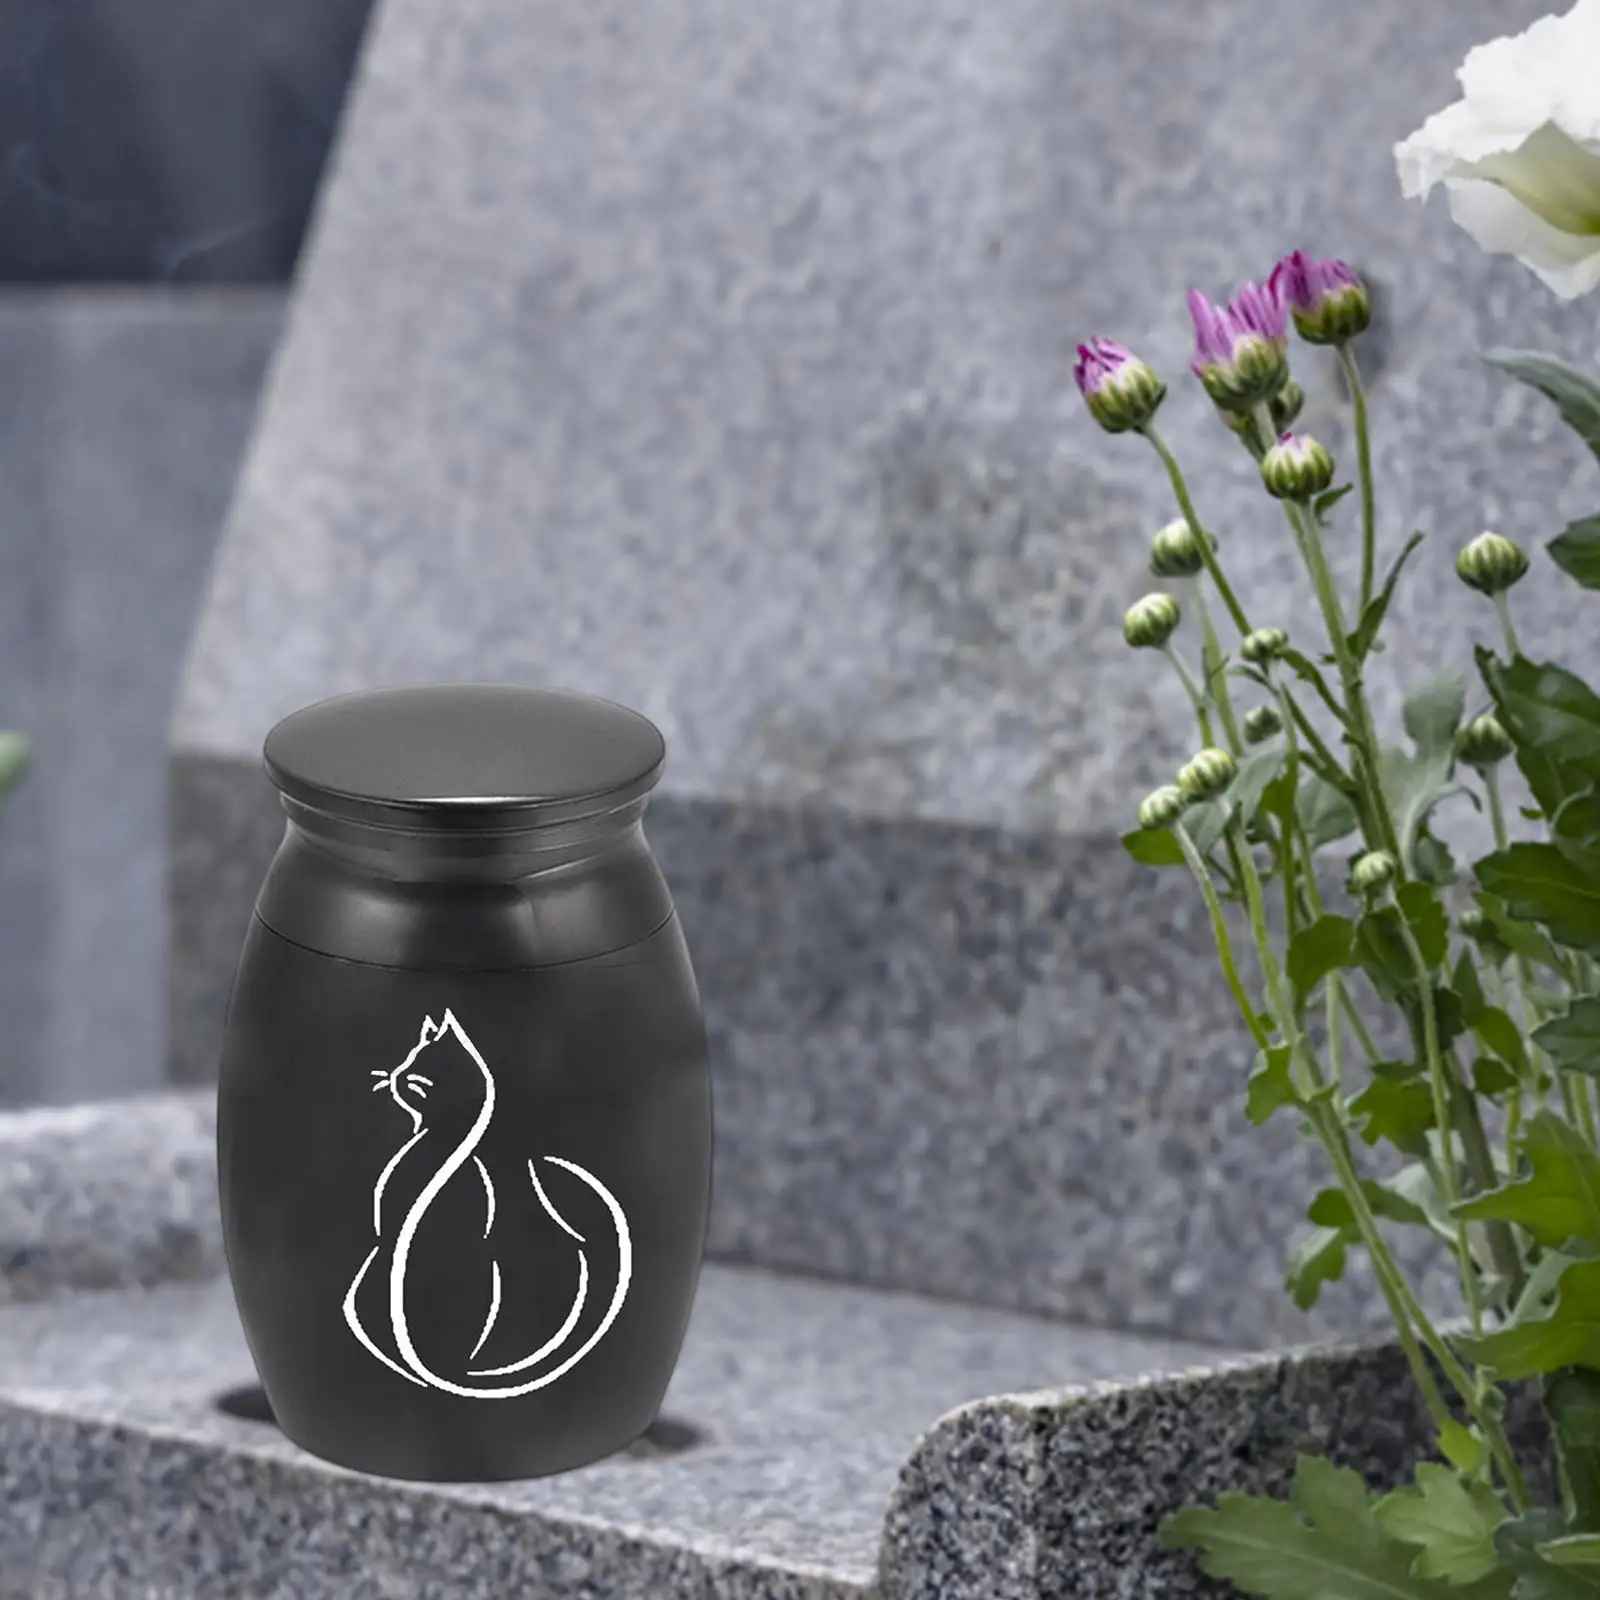 Pet Urn Memories Cremation Memorial Urns for Pet Burial Funeral Supplies